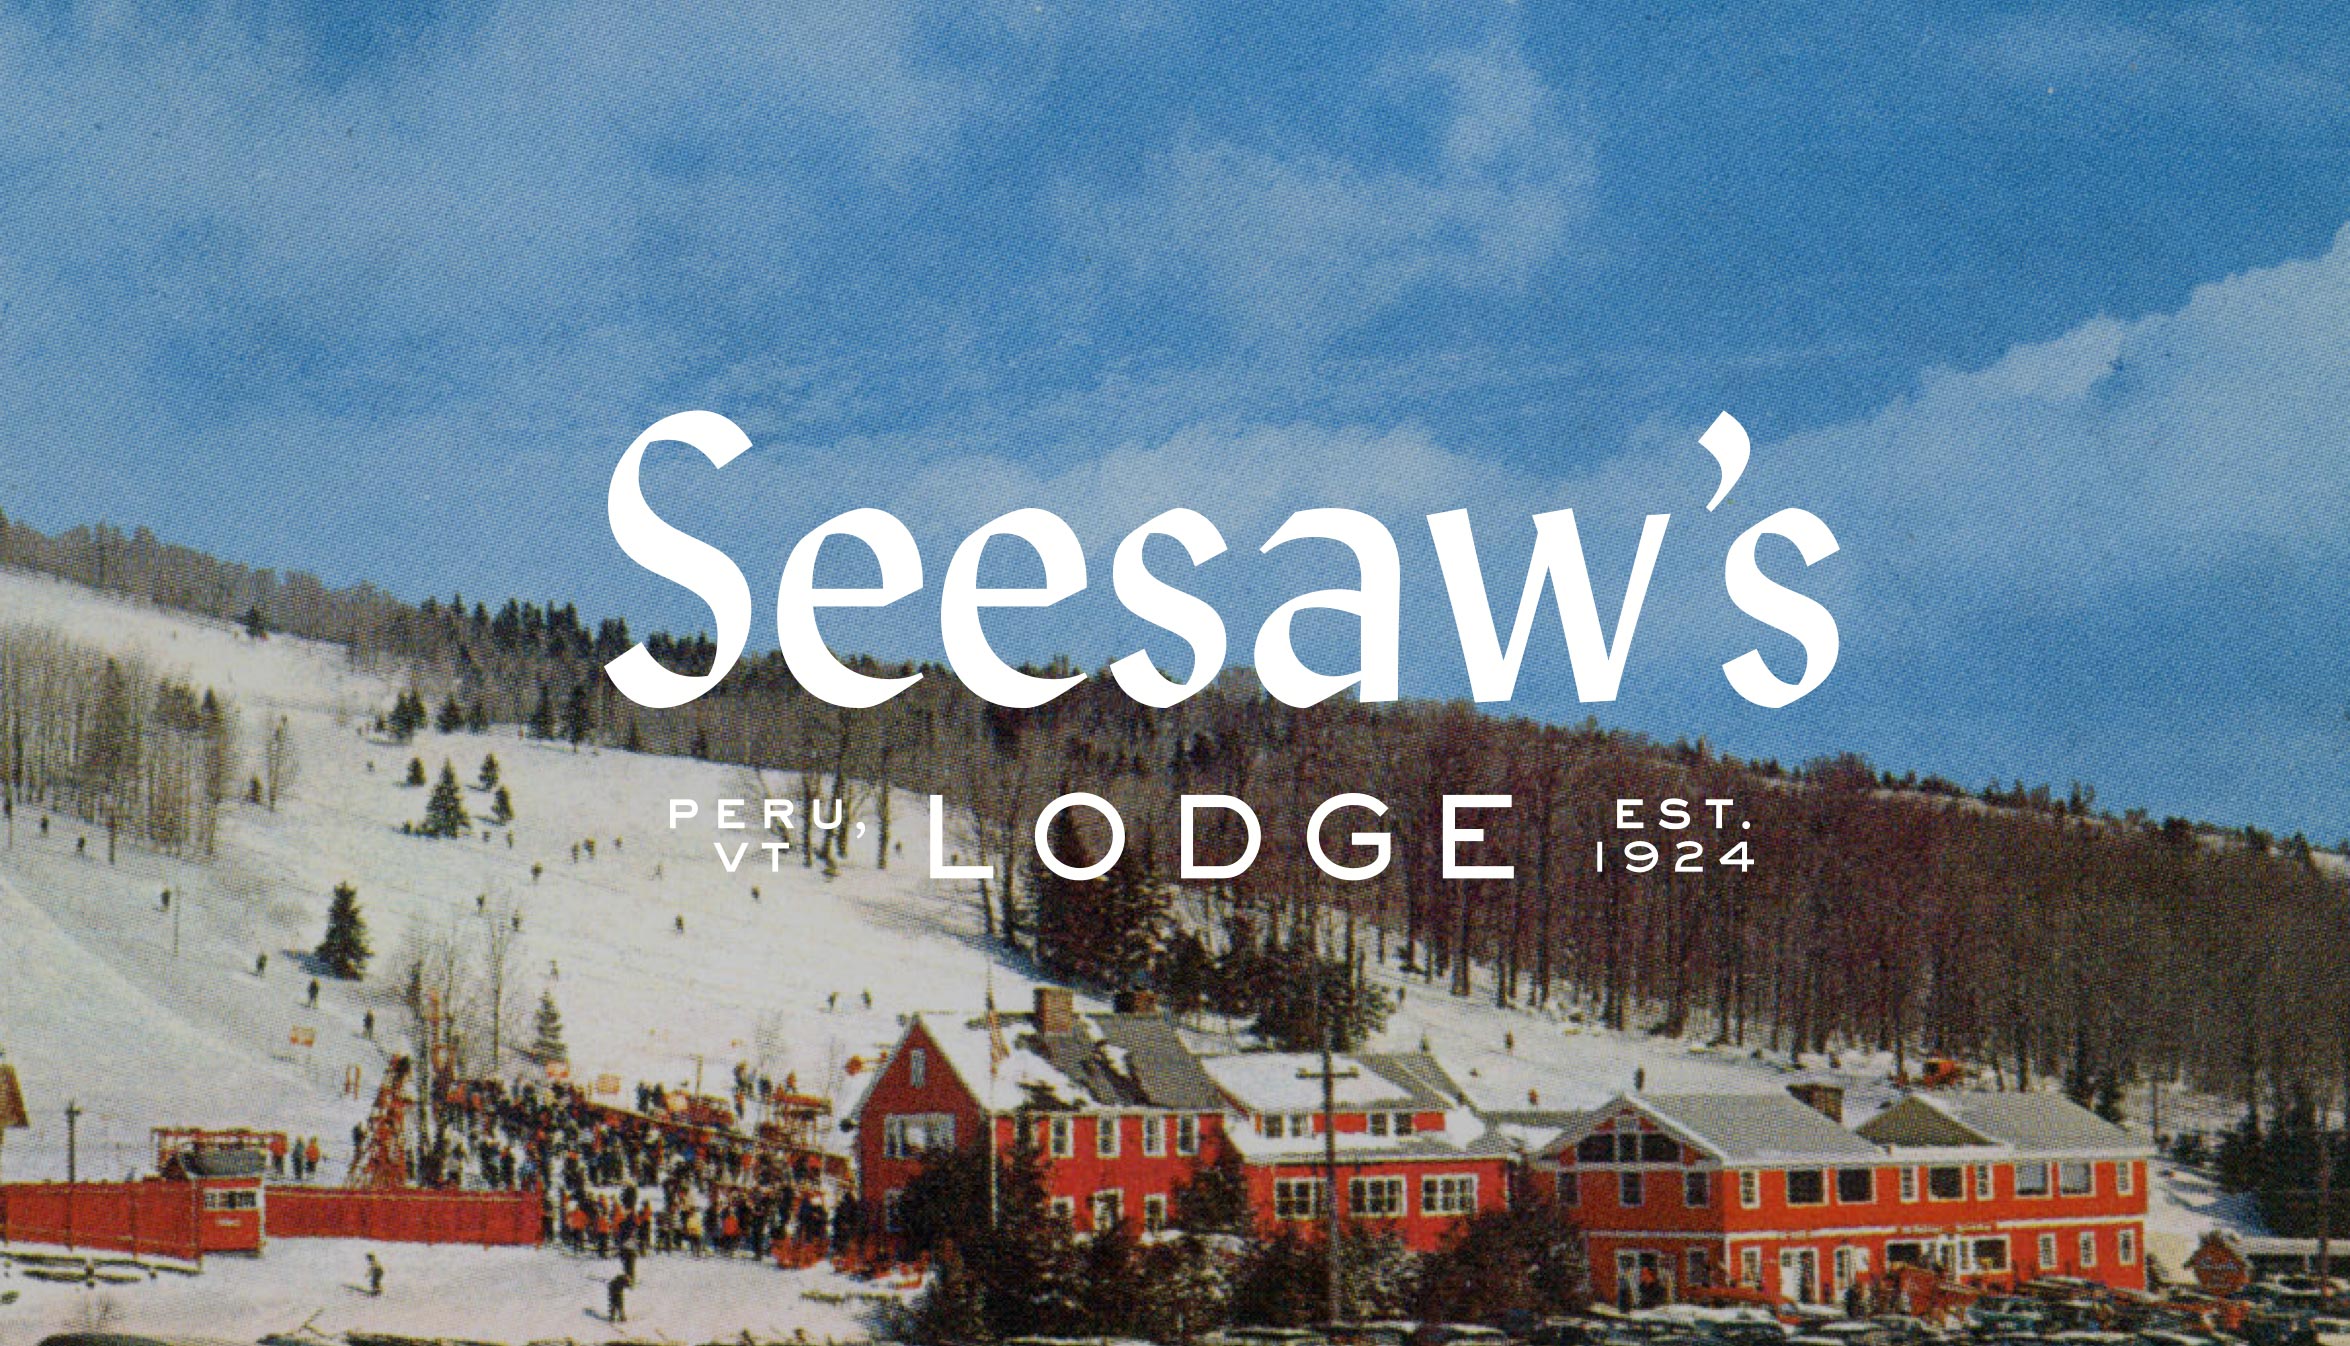 Seesaw's Lodge